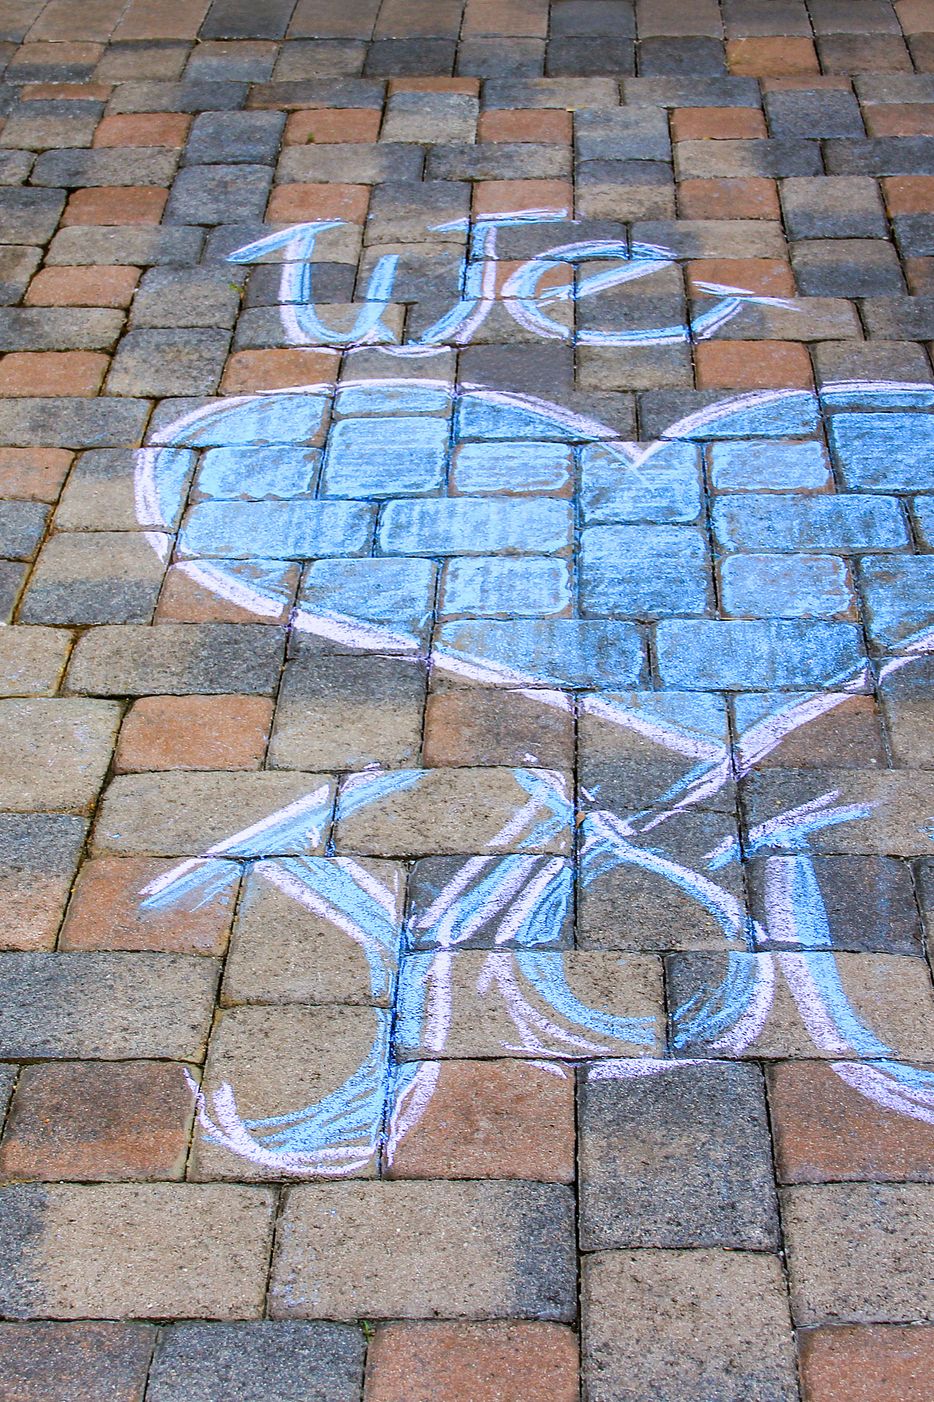 sidewalk pavers with chalk message